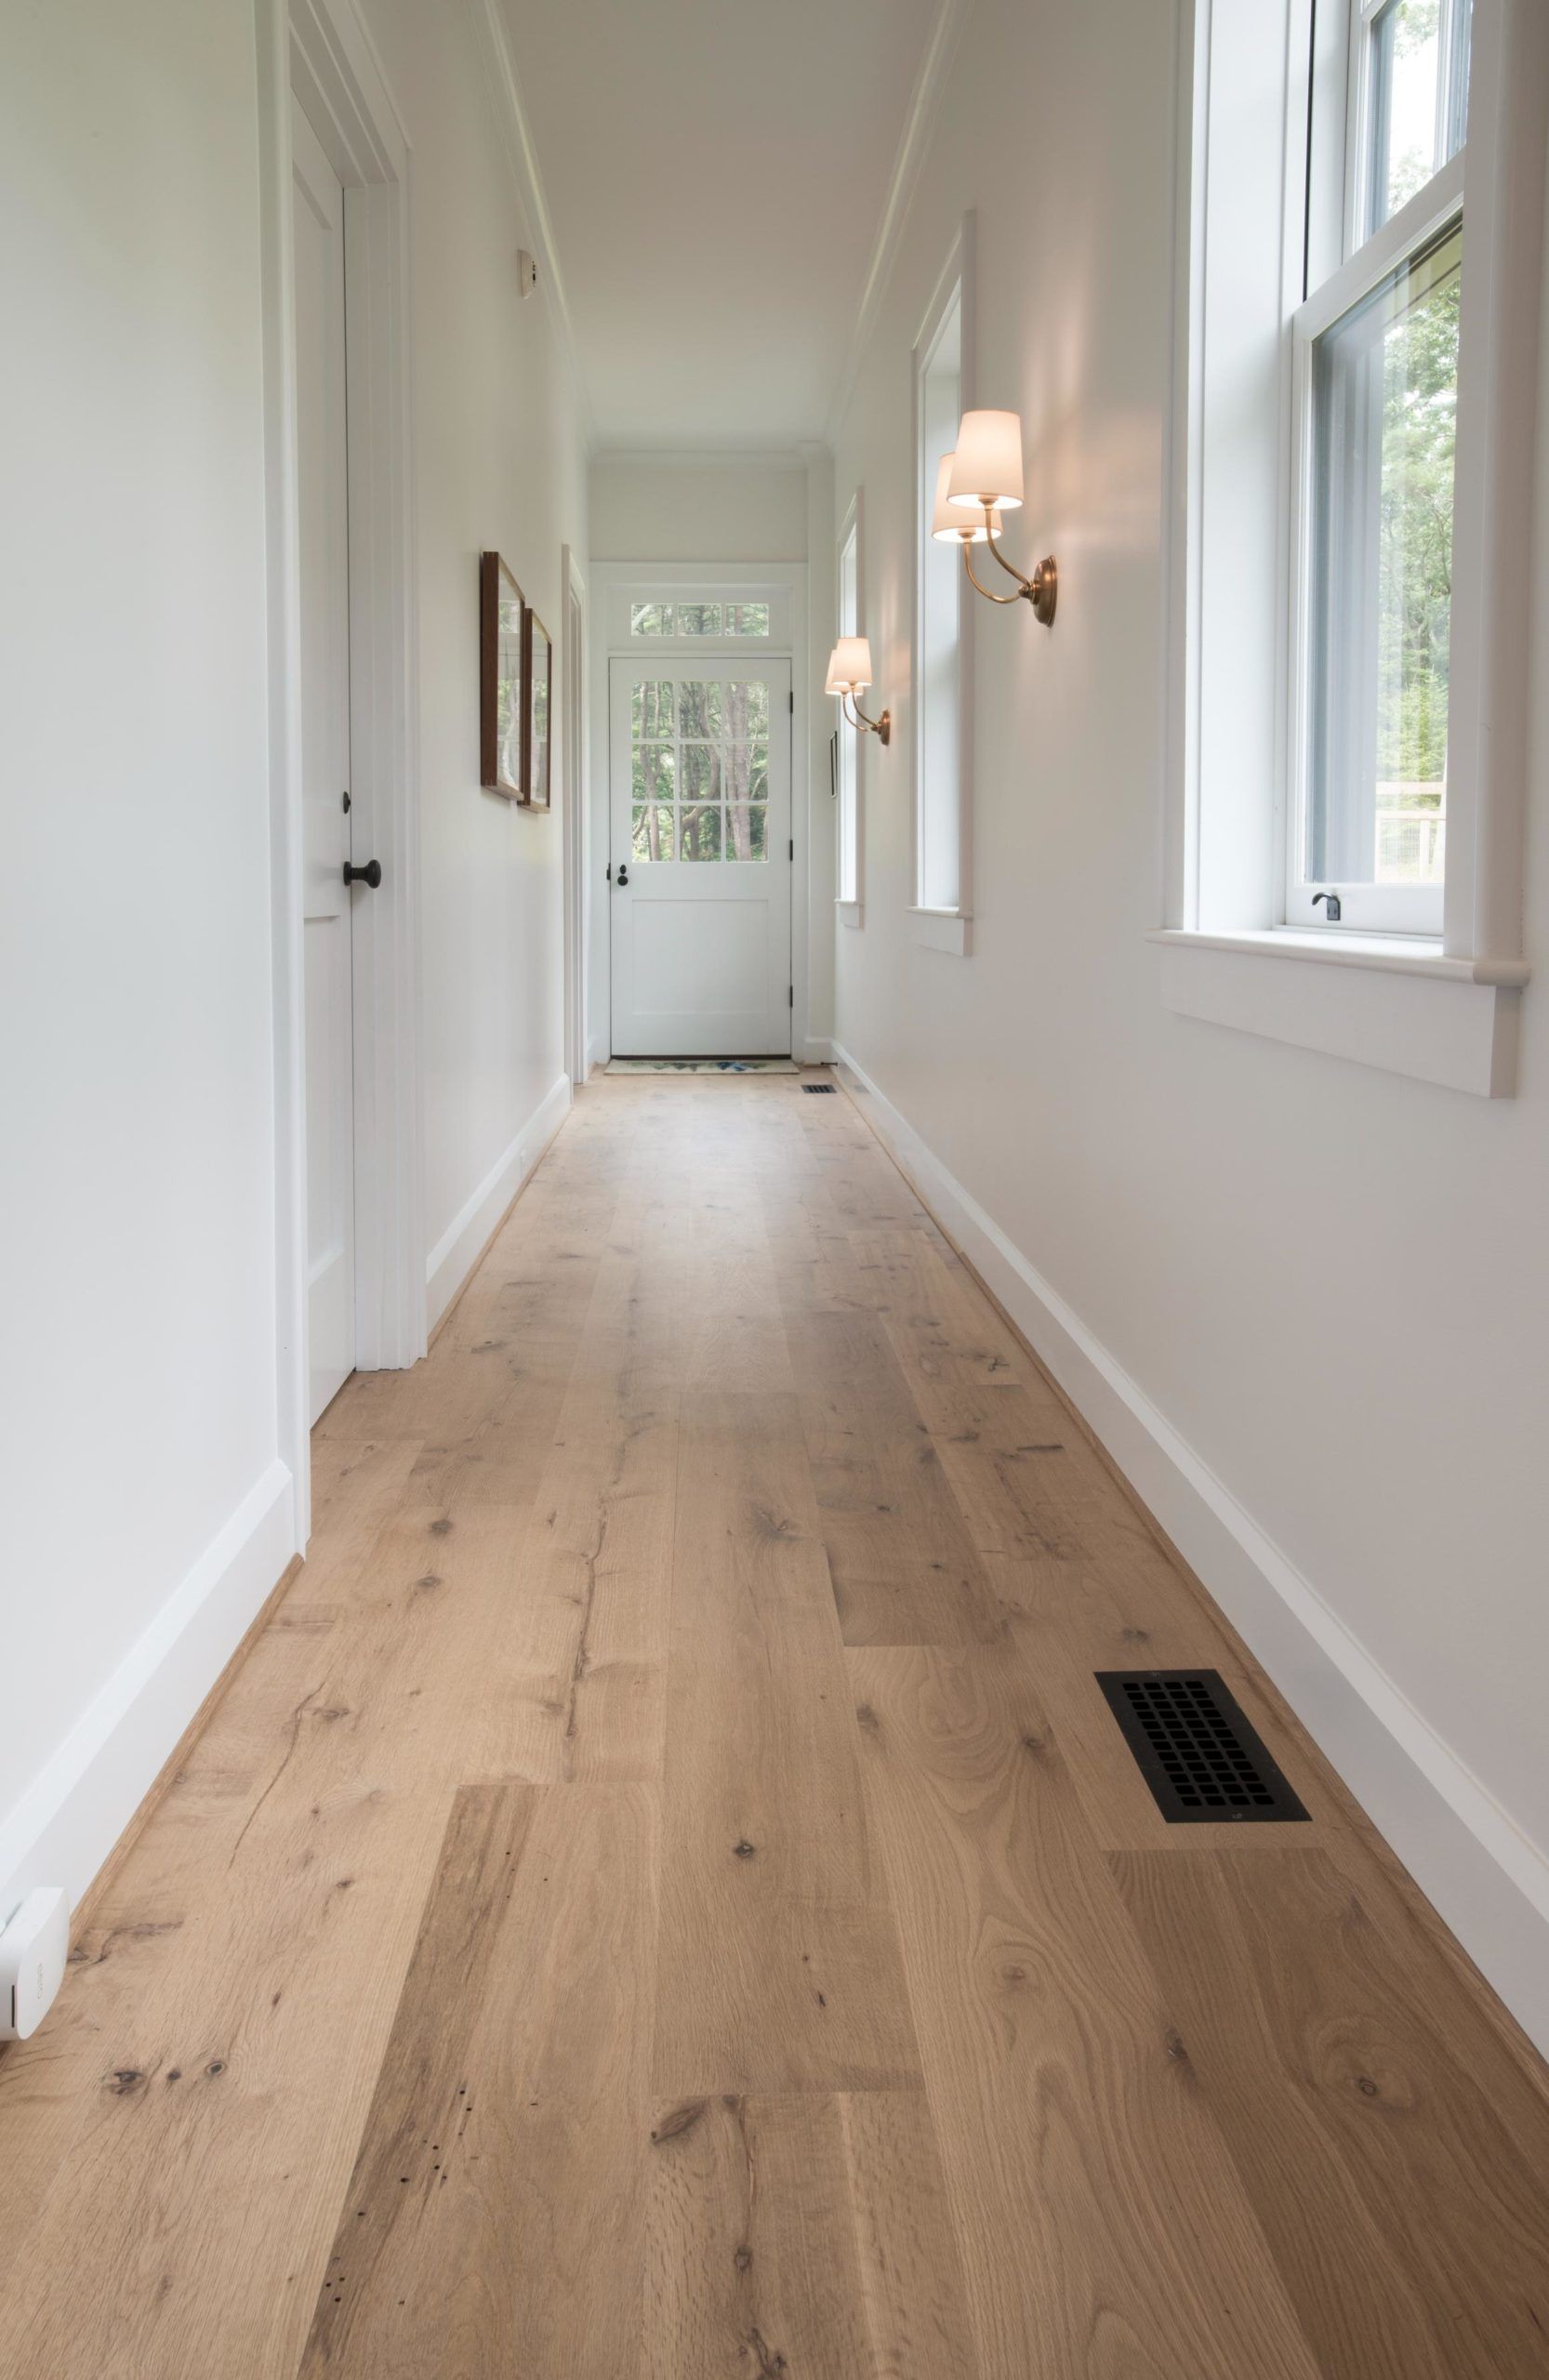 Wooden beauty: laminate floors